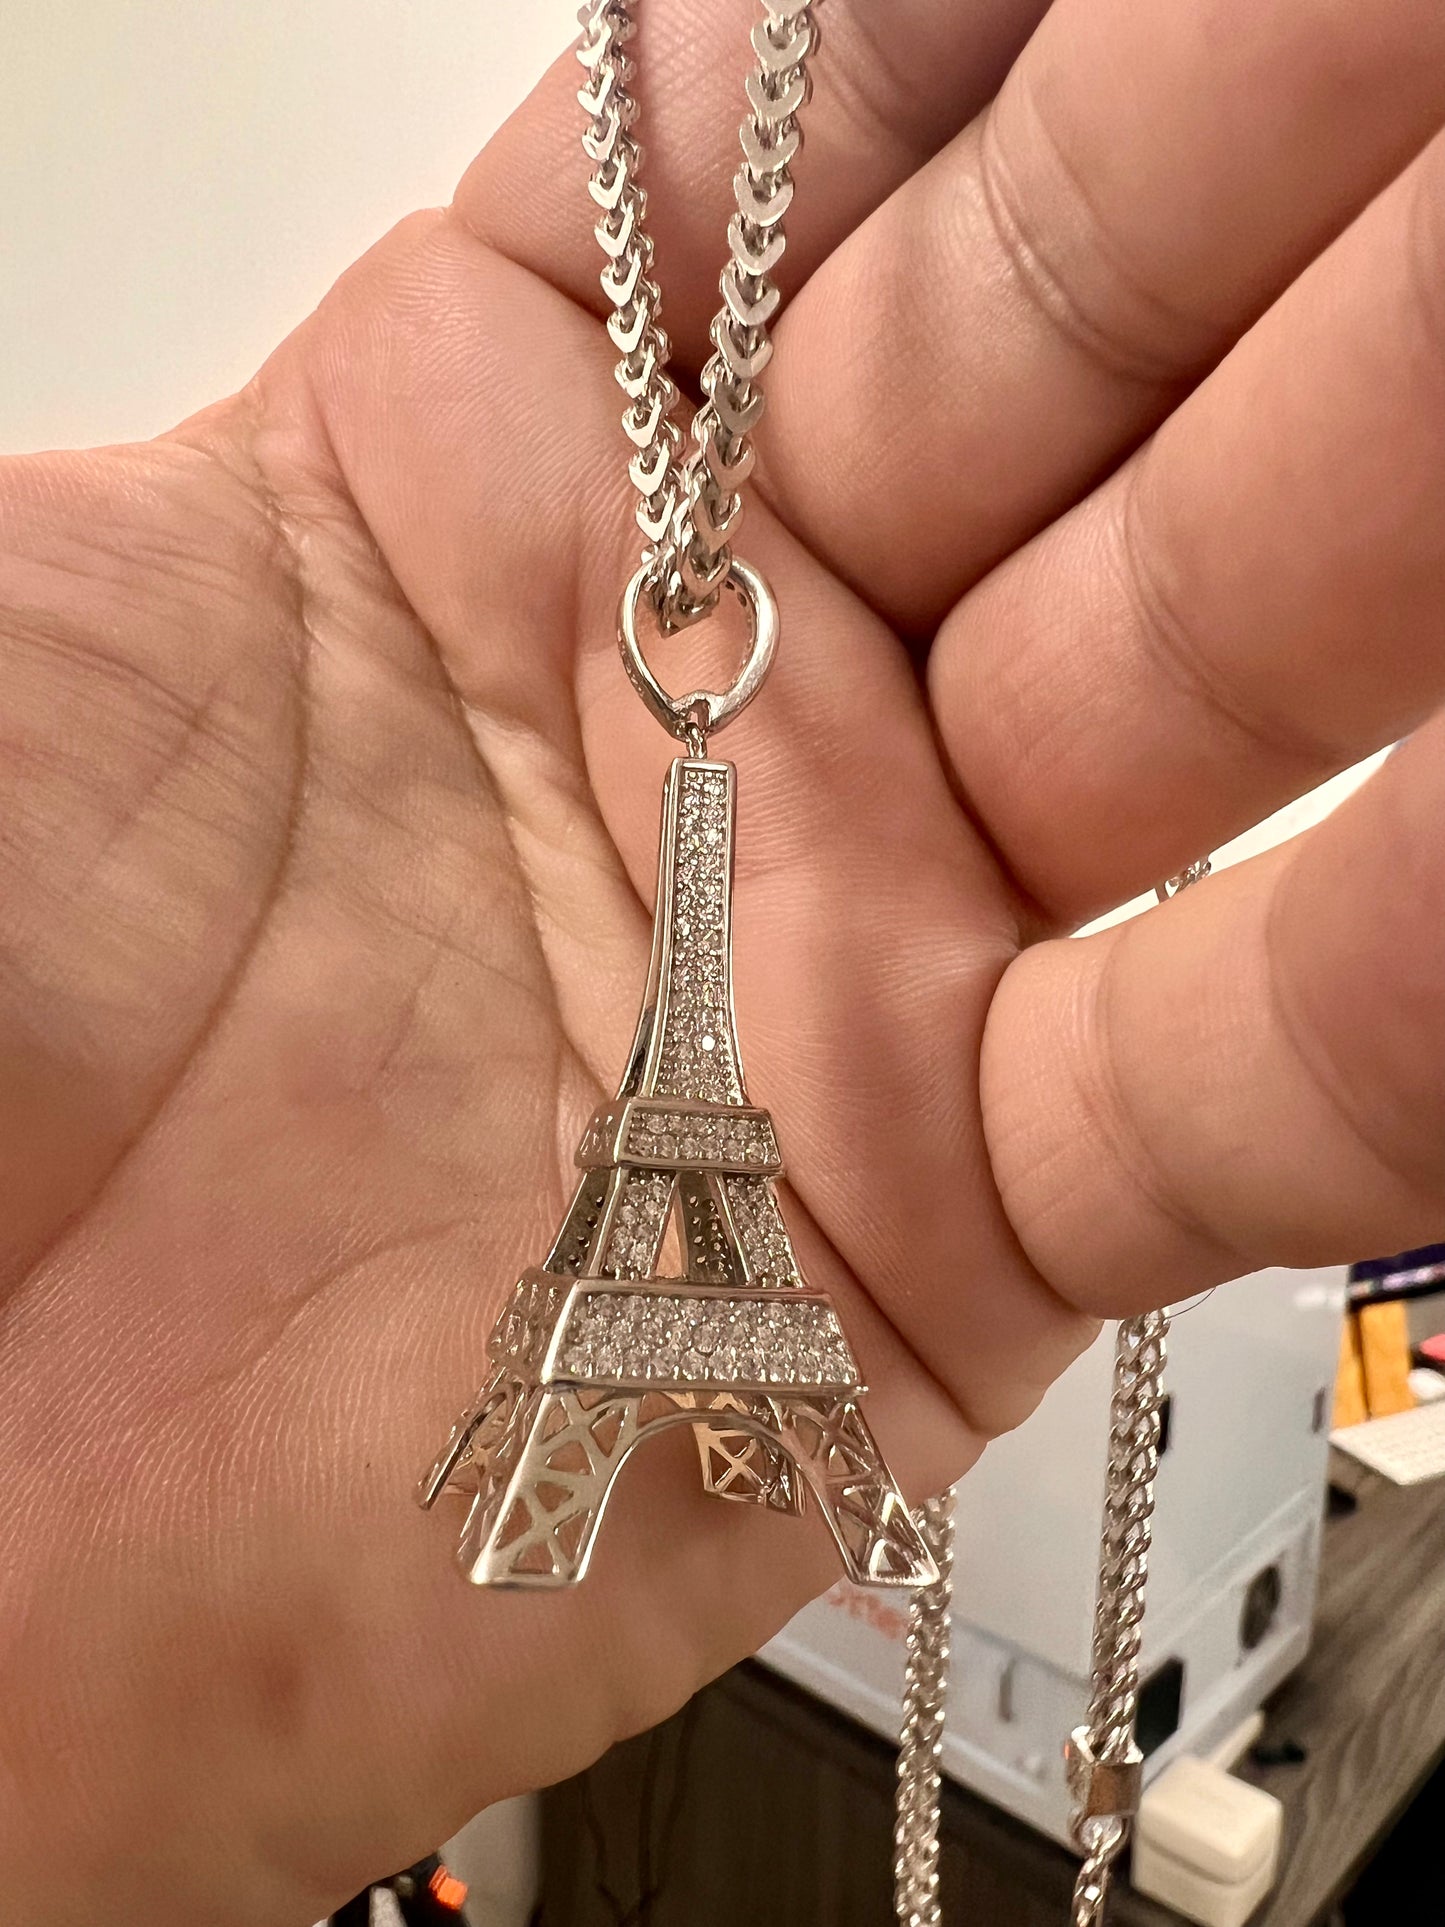 Sterling silver 925 choker sterling silver choker big tower Eiffel pendant-63839